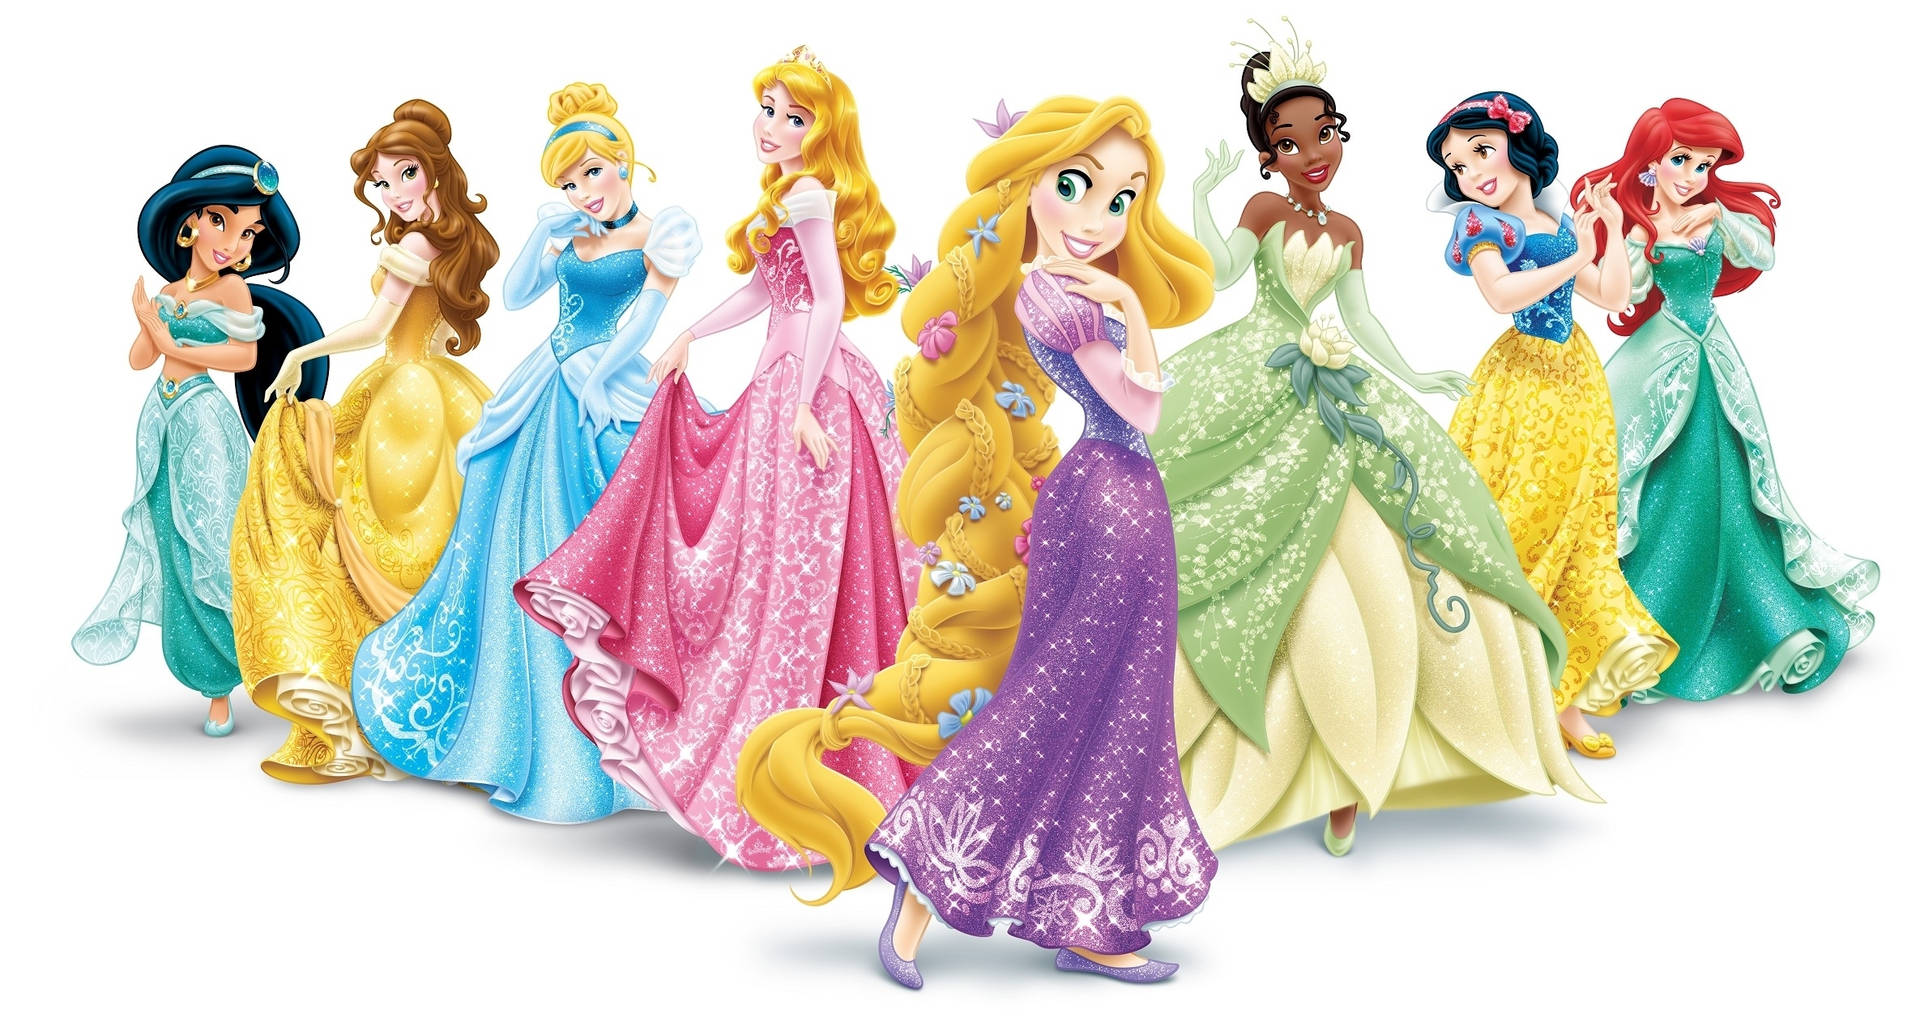 Disney Princesses Digital Art Wallpaper